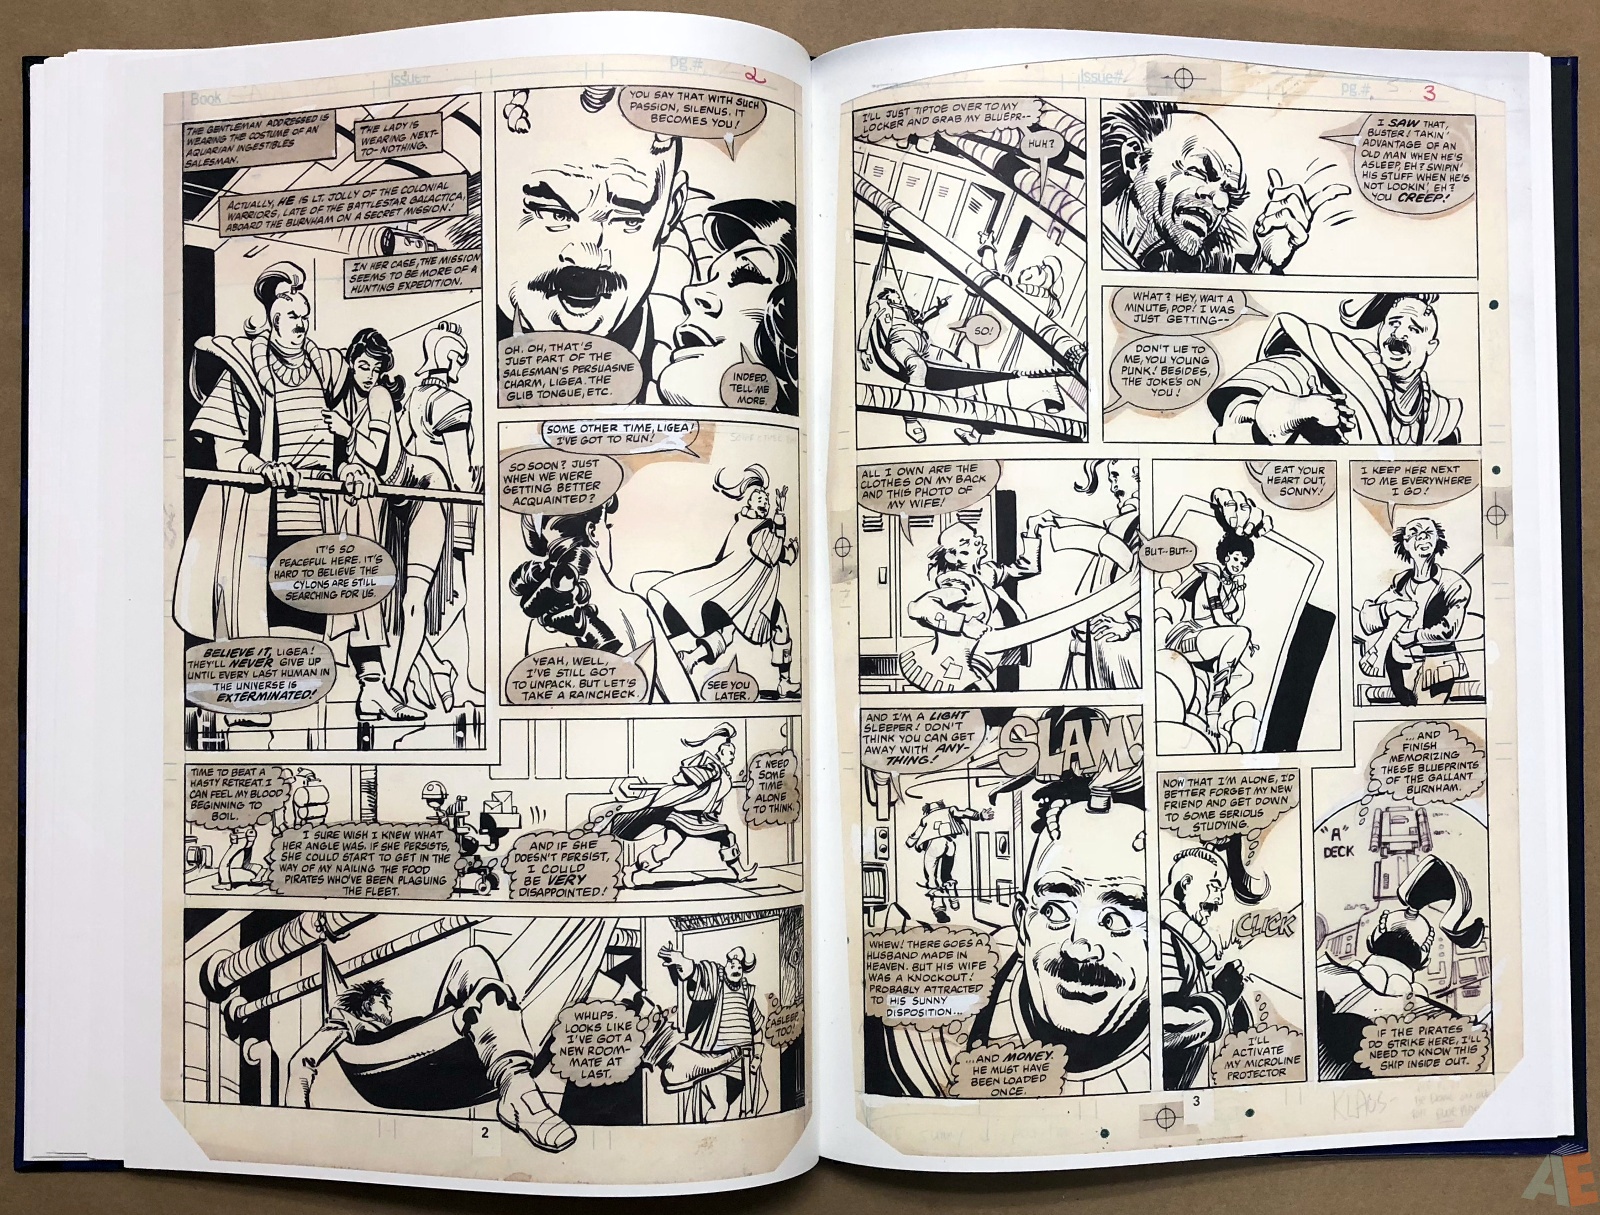 Walter Simonson's Battlestar Galactica Art Edition